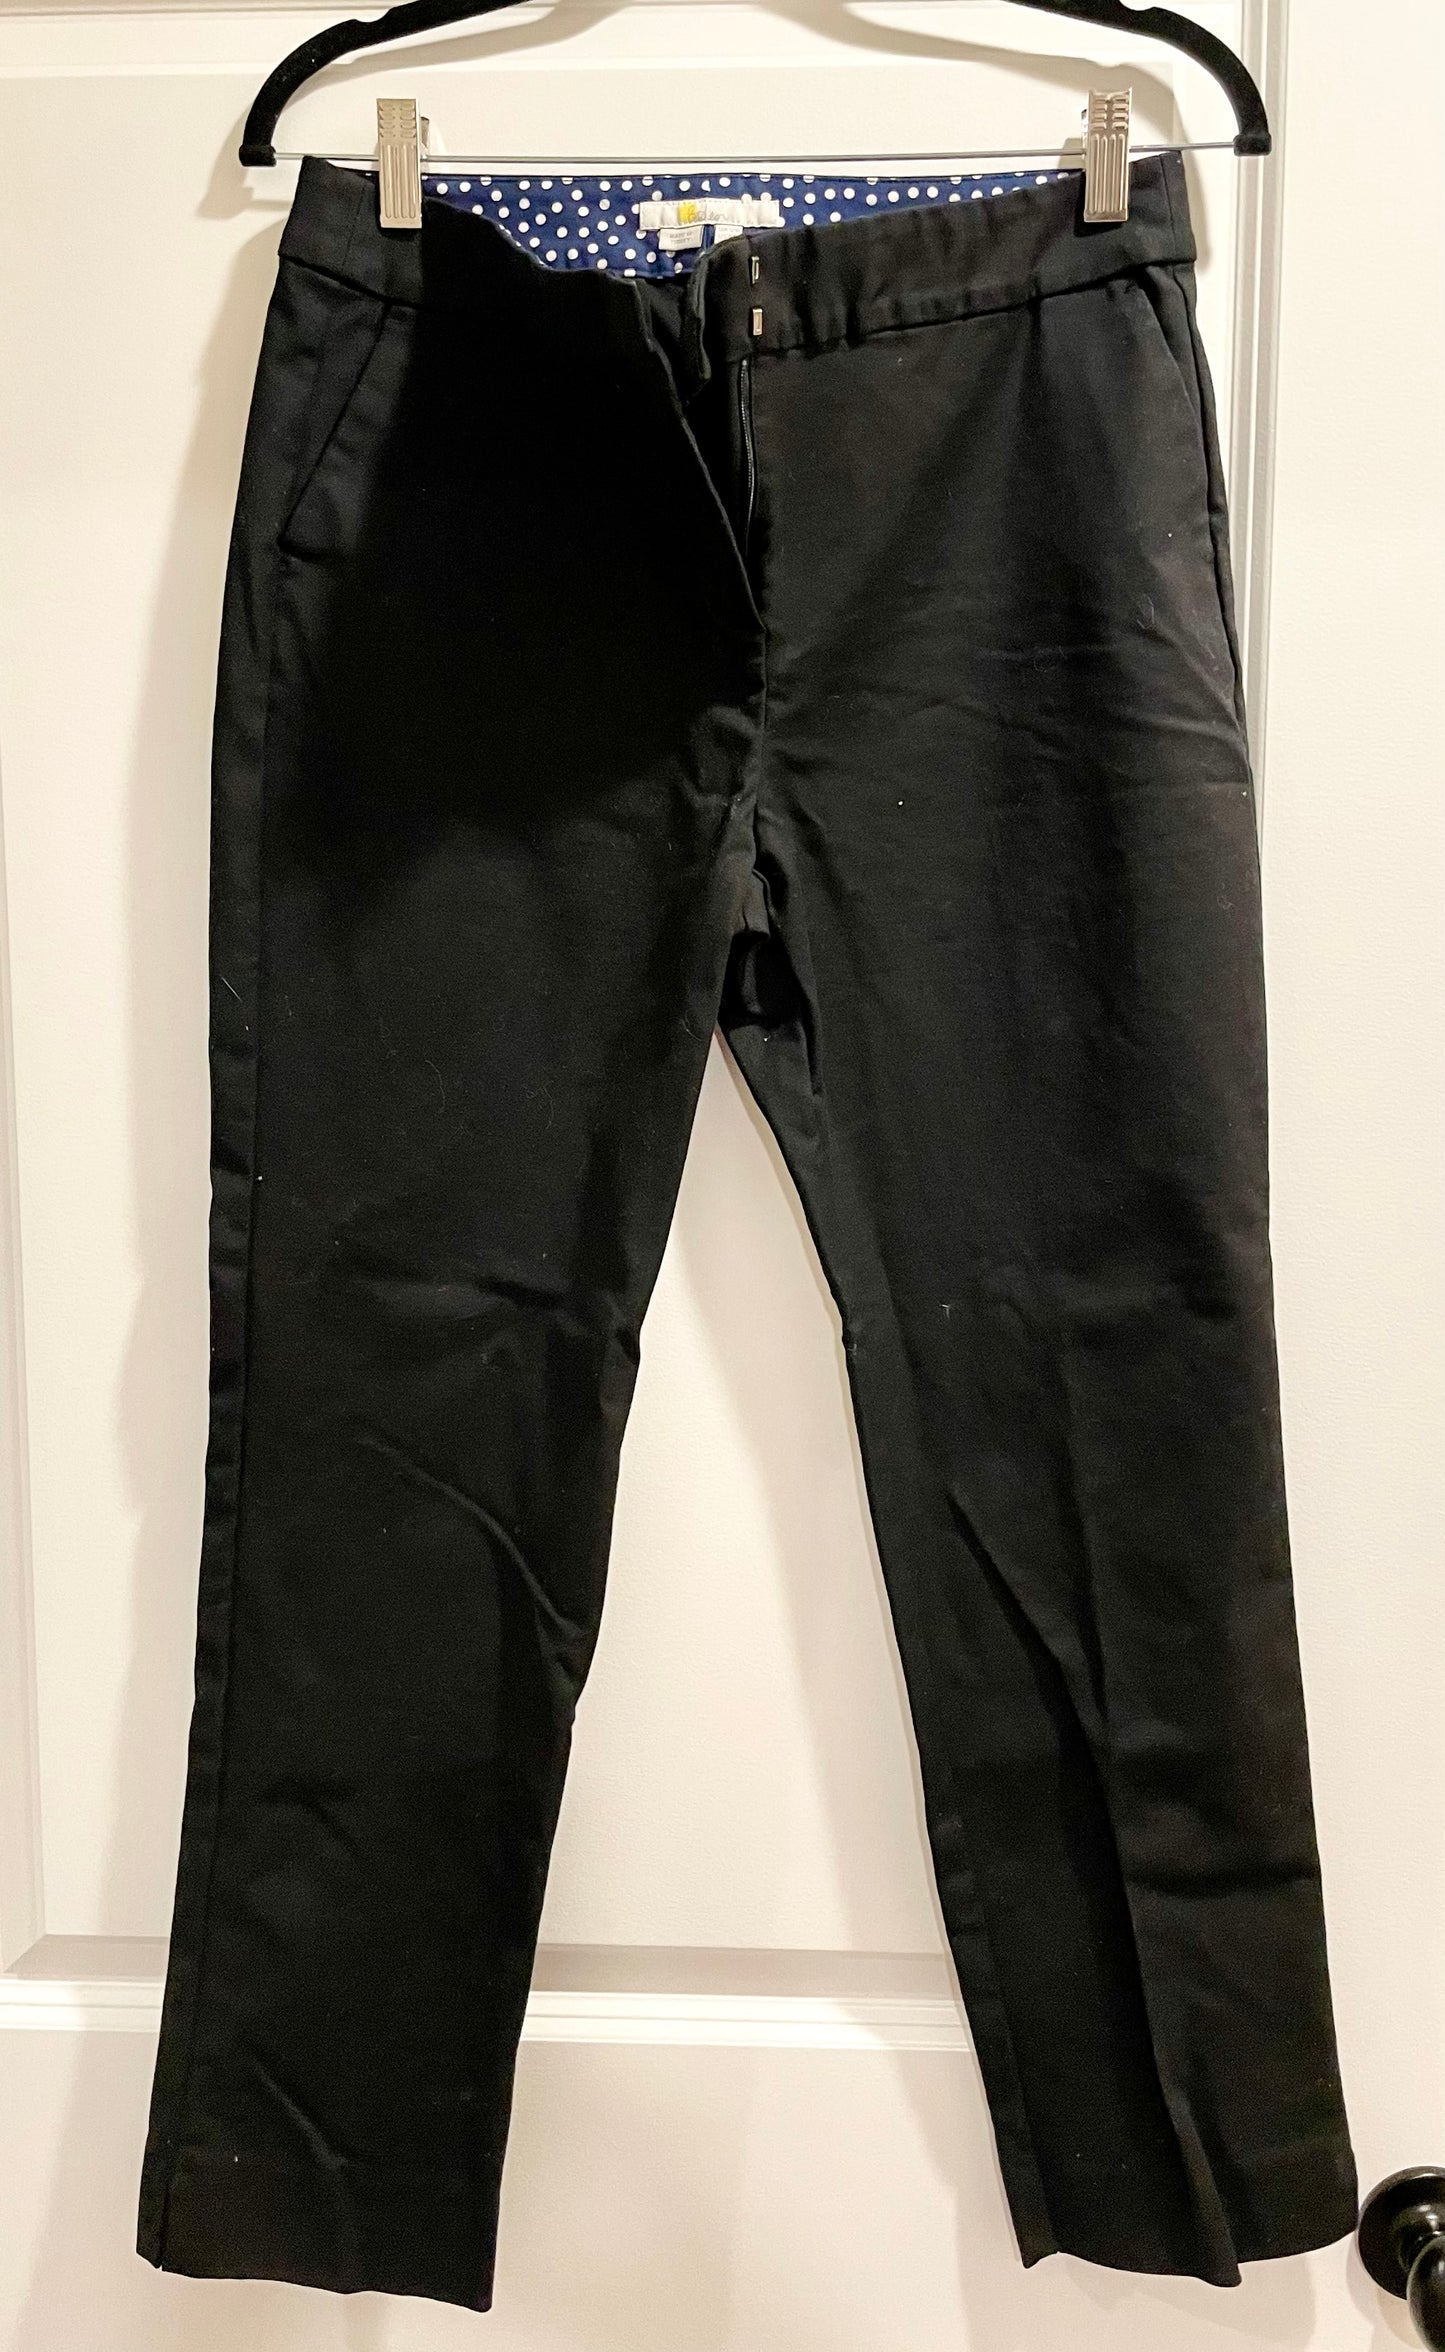 Black Boden dress pants size 8